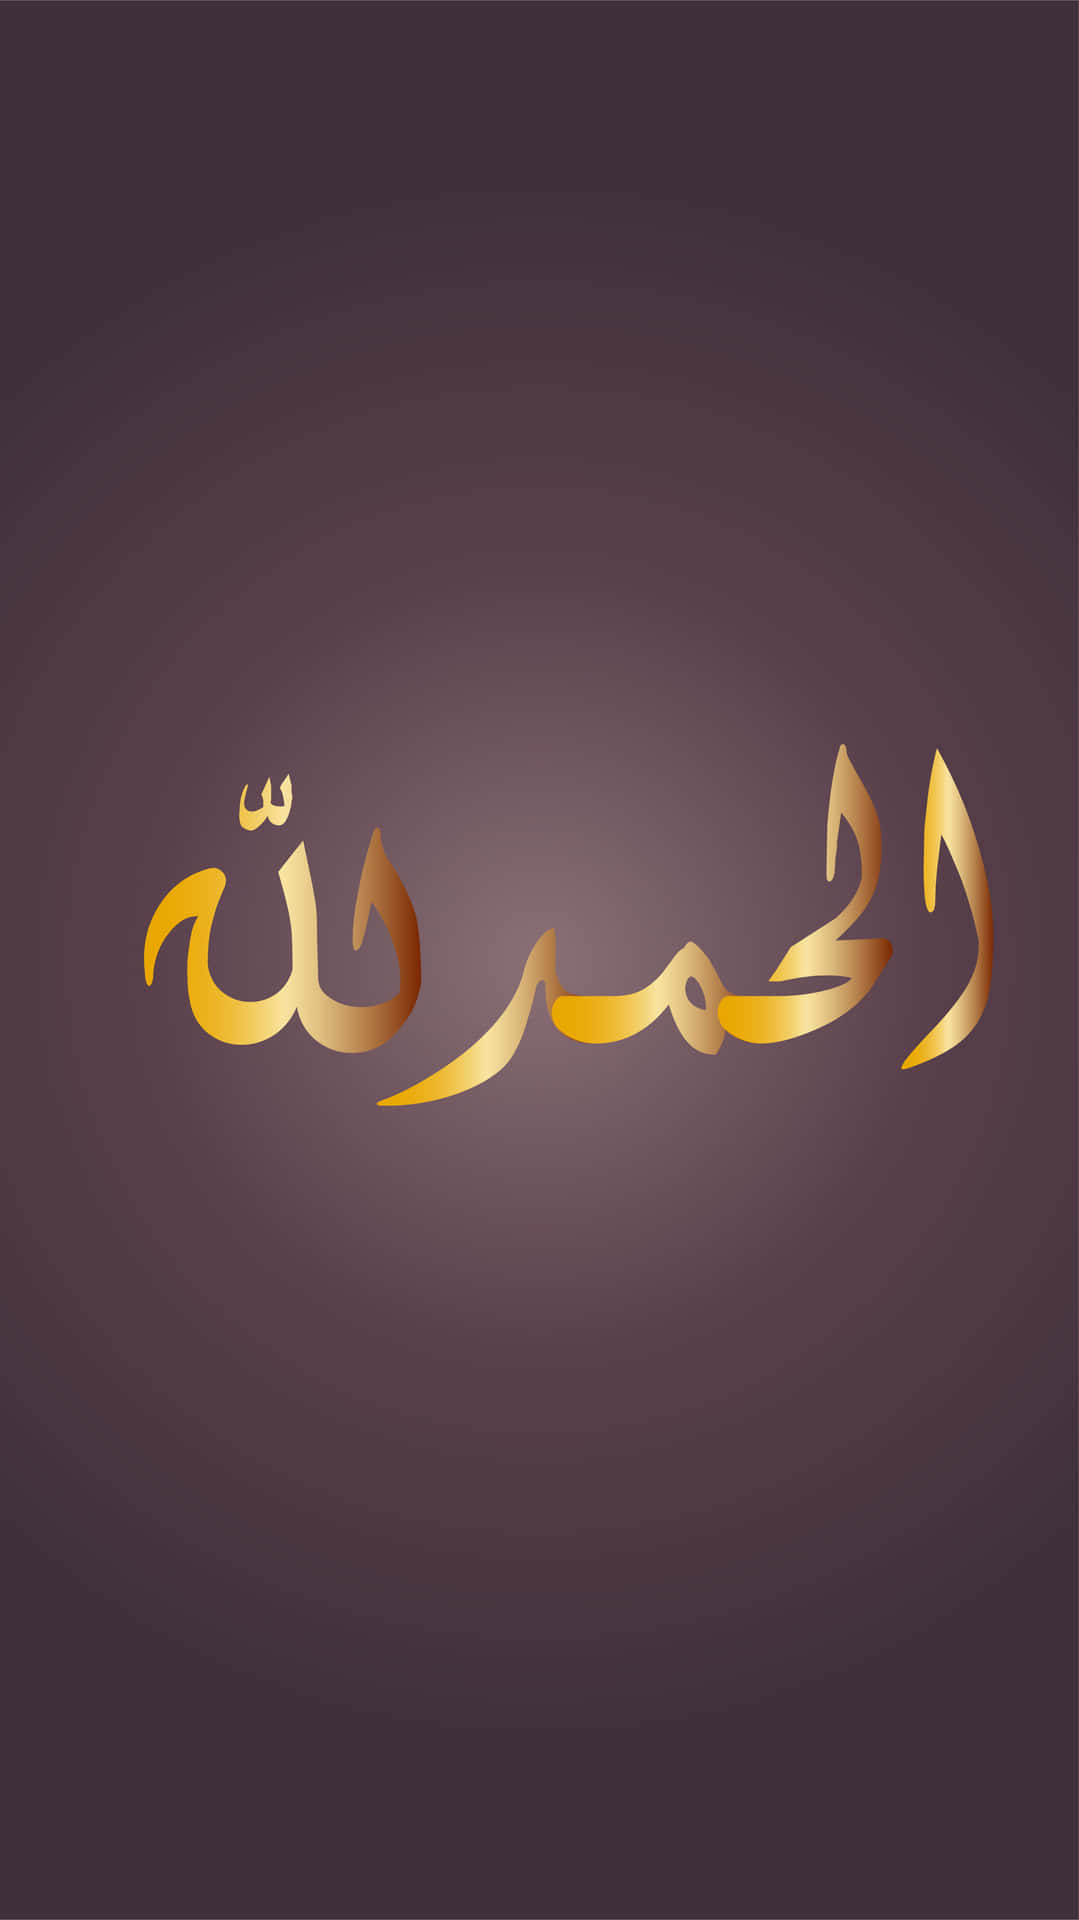 Traditional Arabic script background.